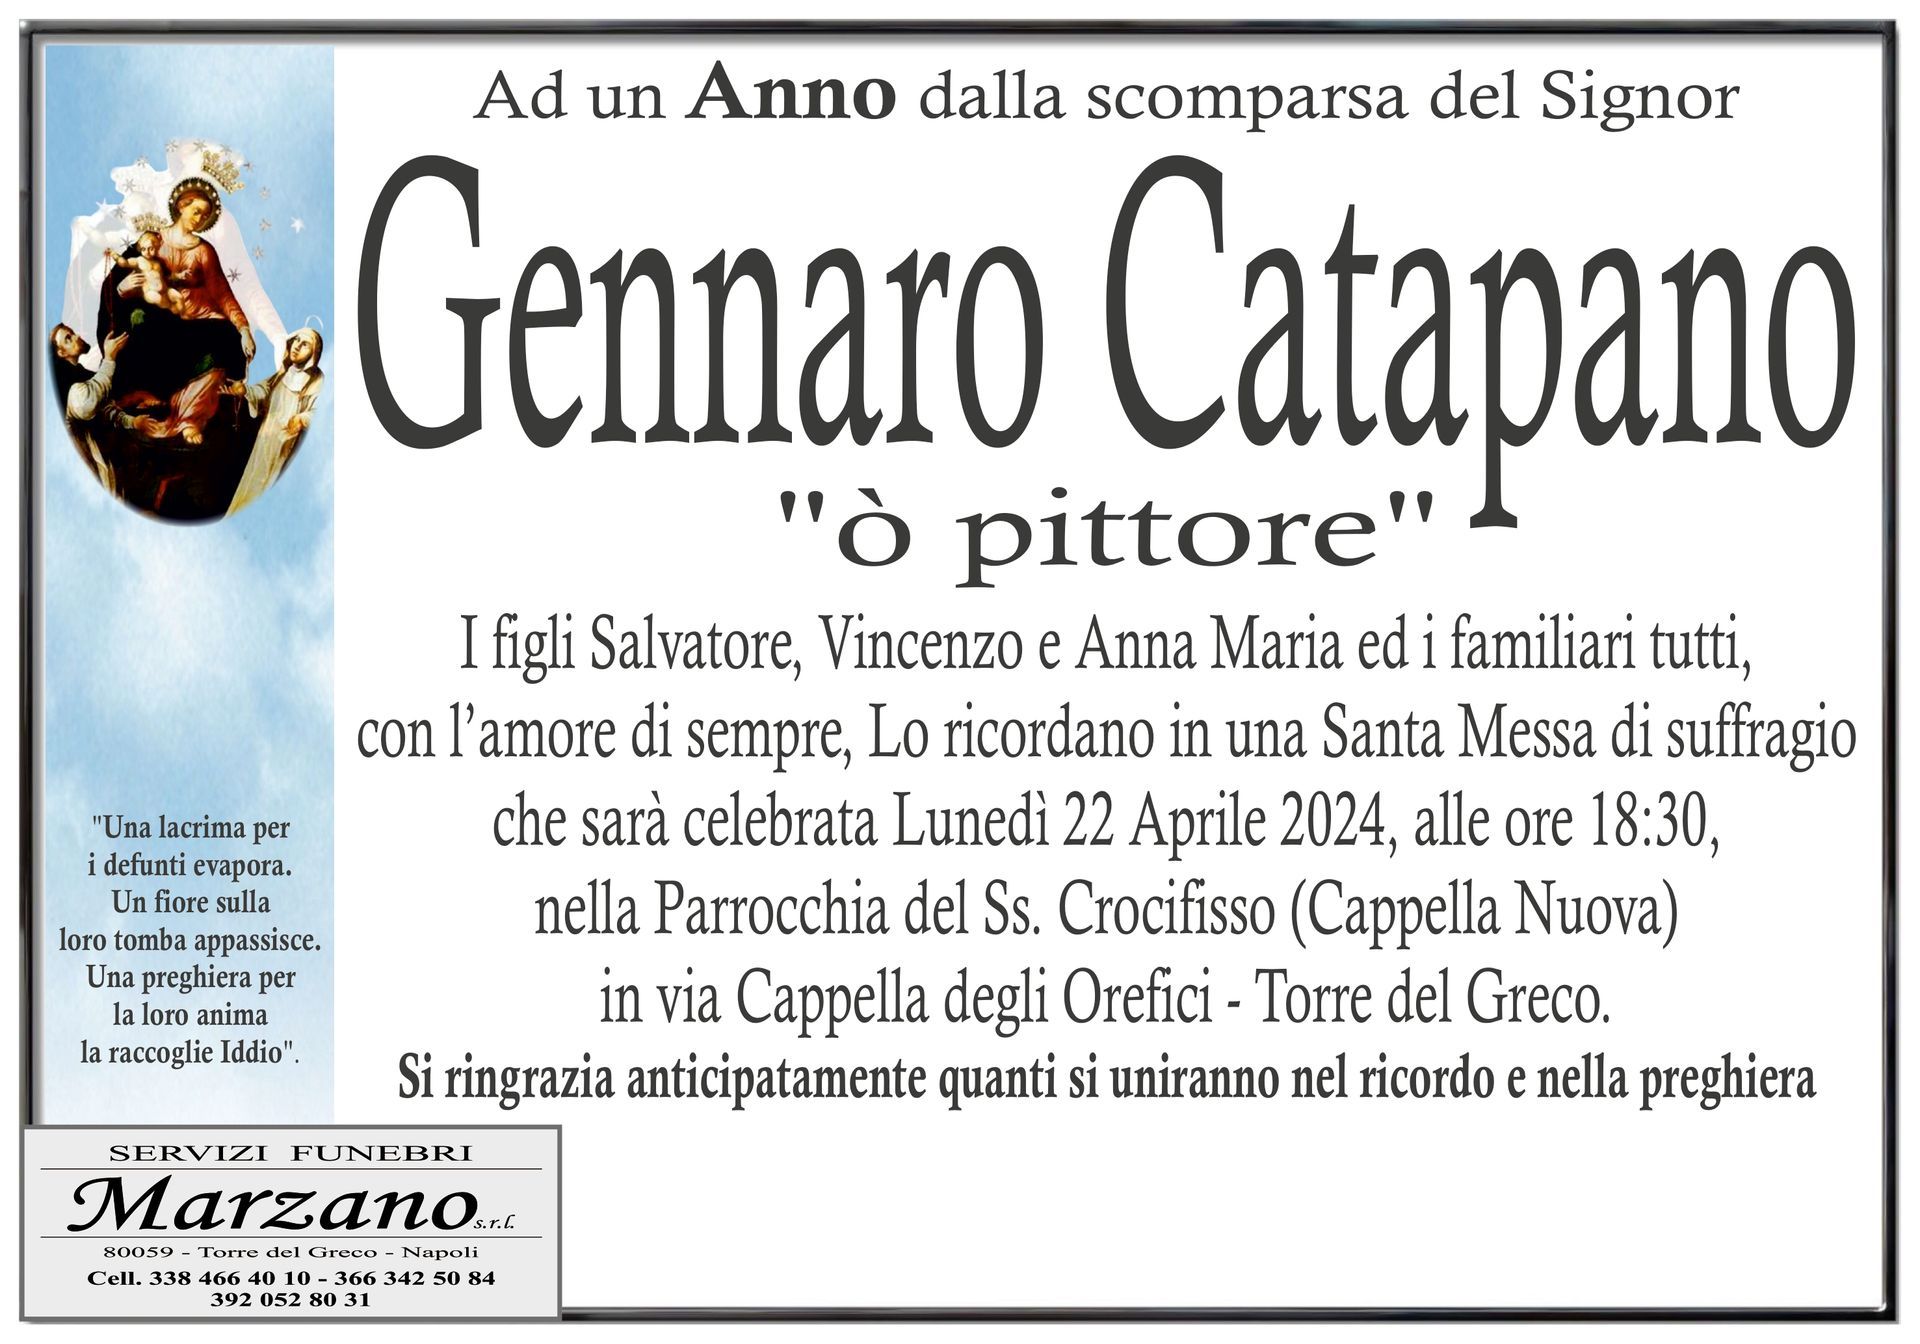 Gennaro Catapano